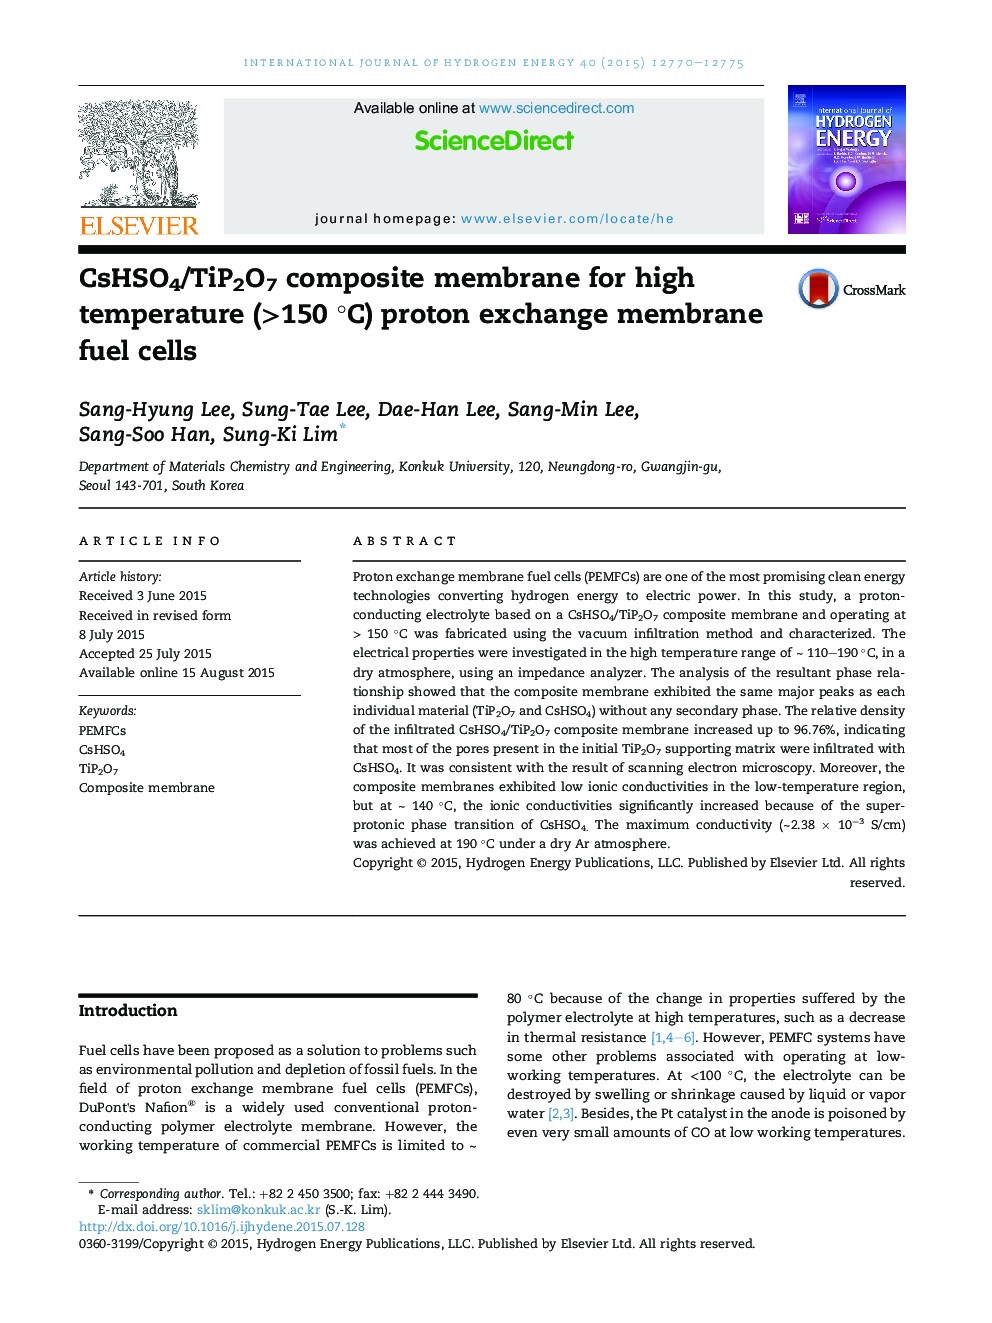 CsHSO4/TiP2O7 composite membrane for high temperature (>150 °C) proton exchange membrane fuel cells